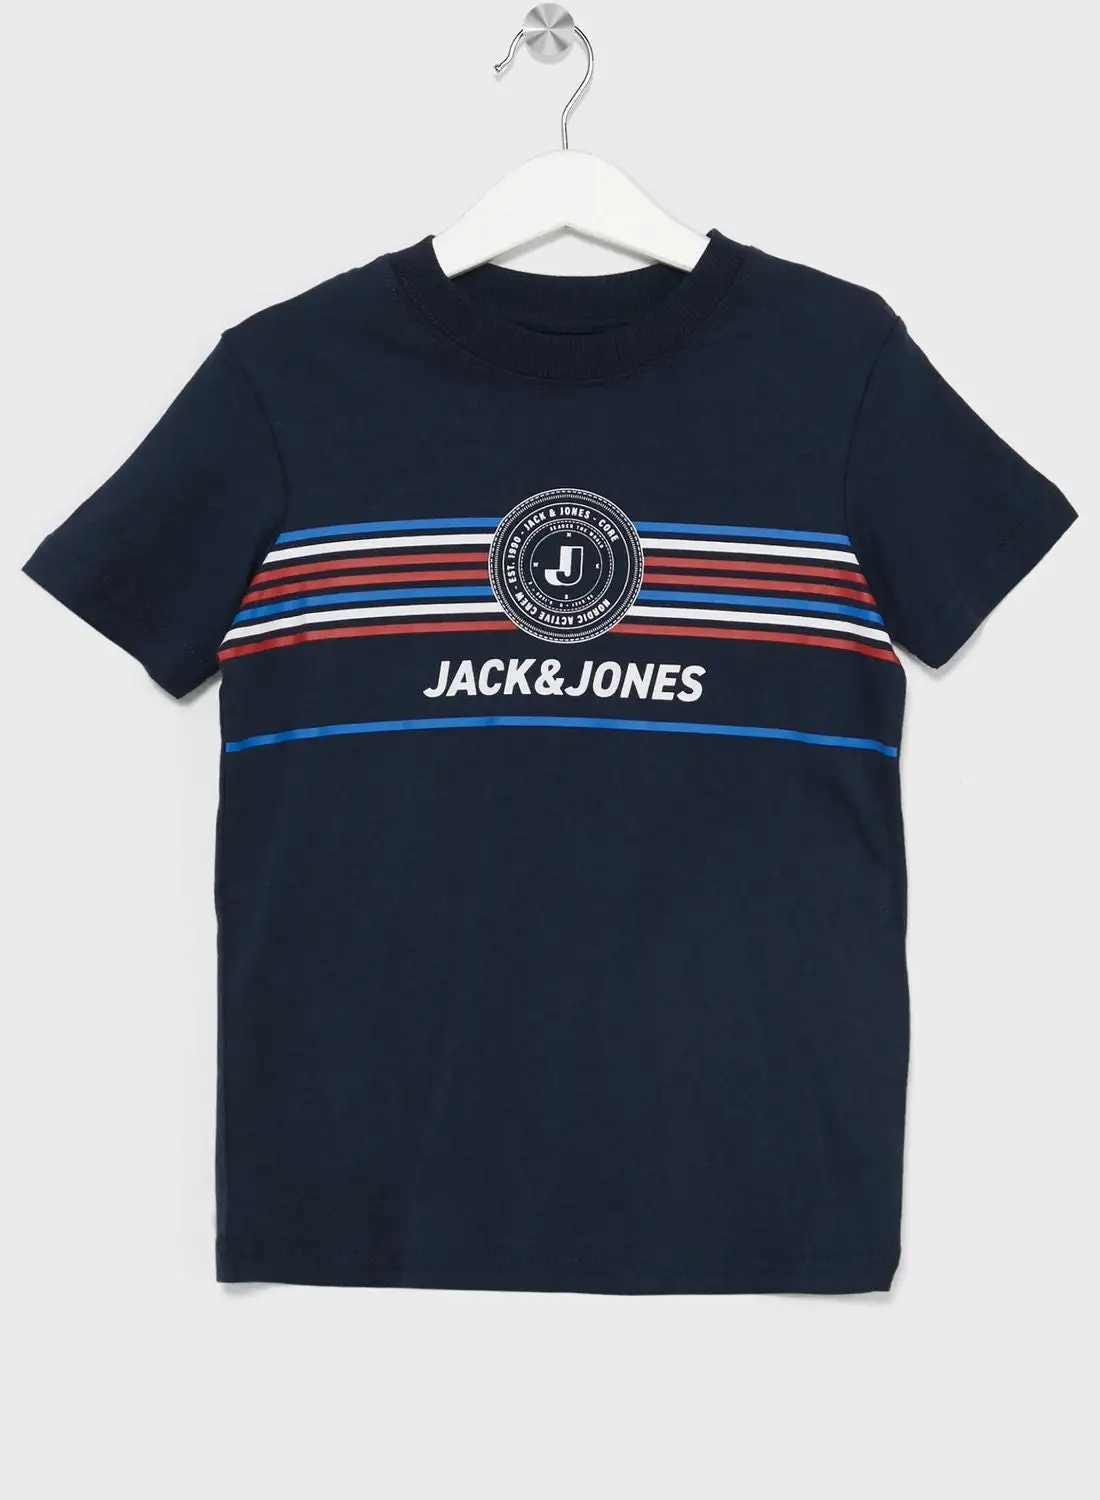 JACK & JONES Kids Side Striped T-Shirt